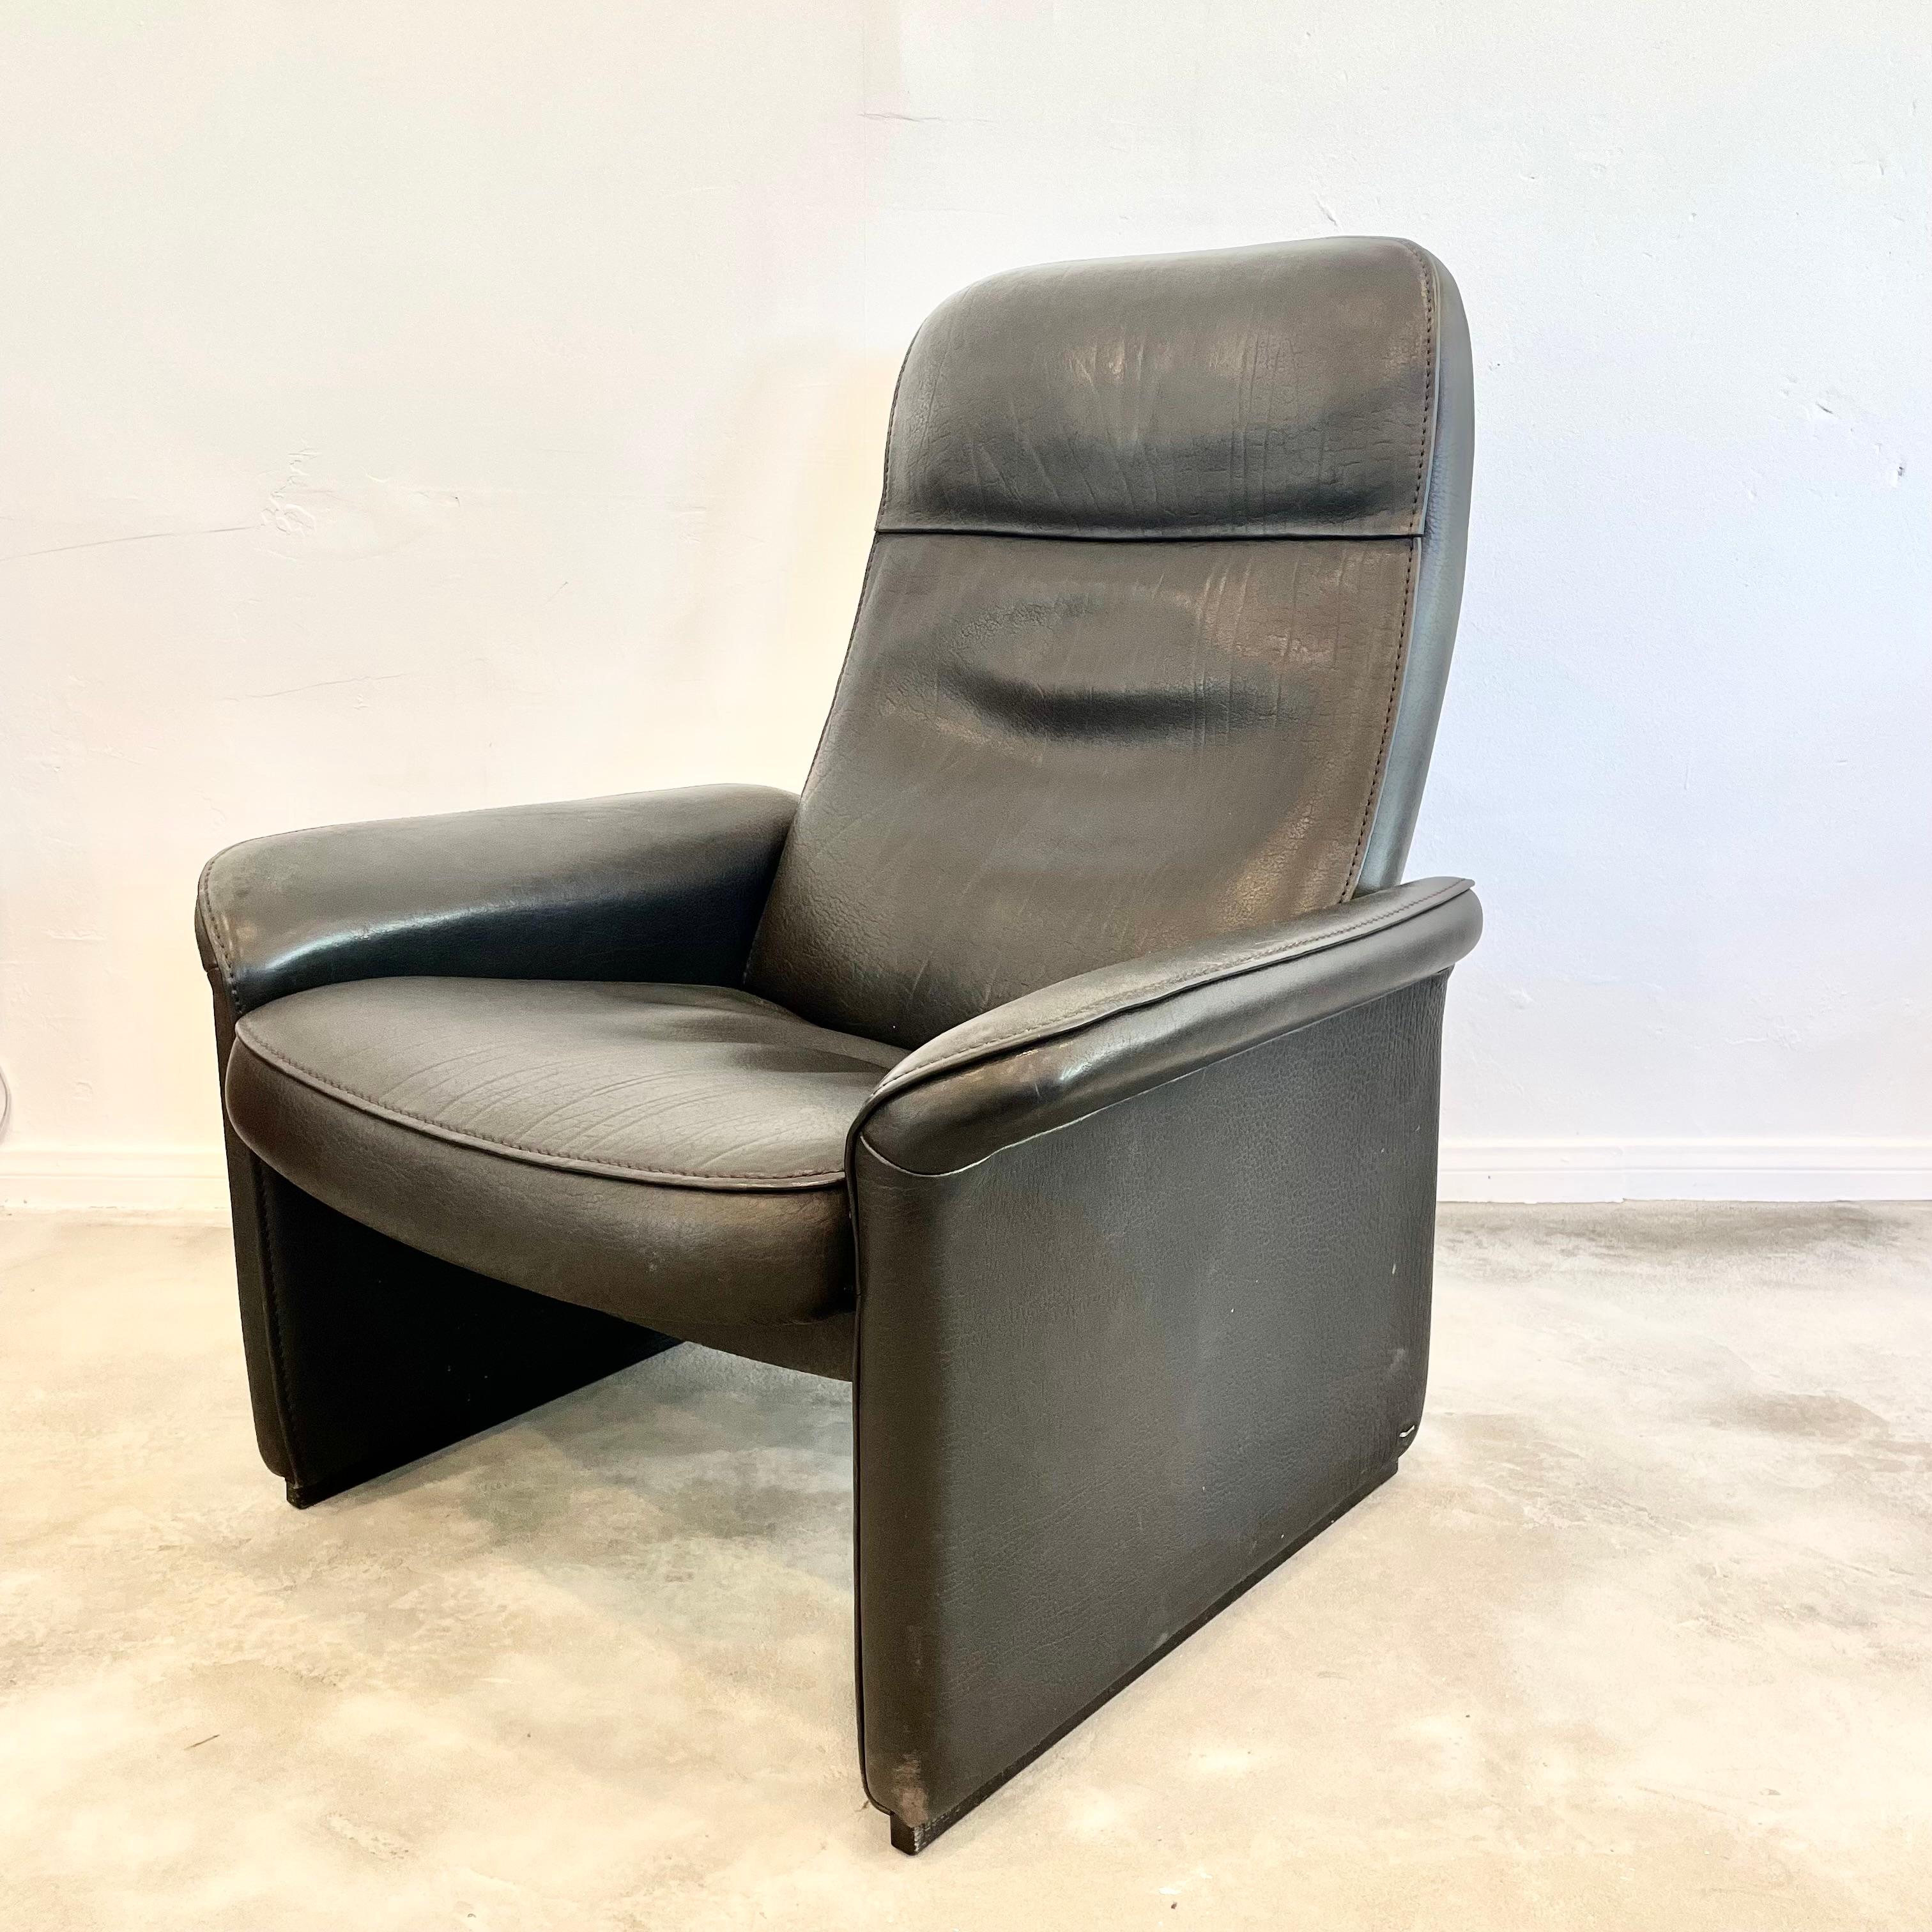 De Sede DS-50 Black Leather Recliner Chair, 1970s Switzerland For Sale 3